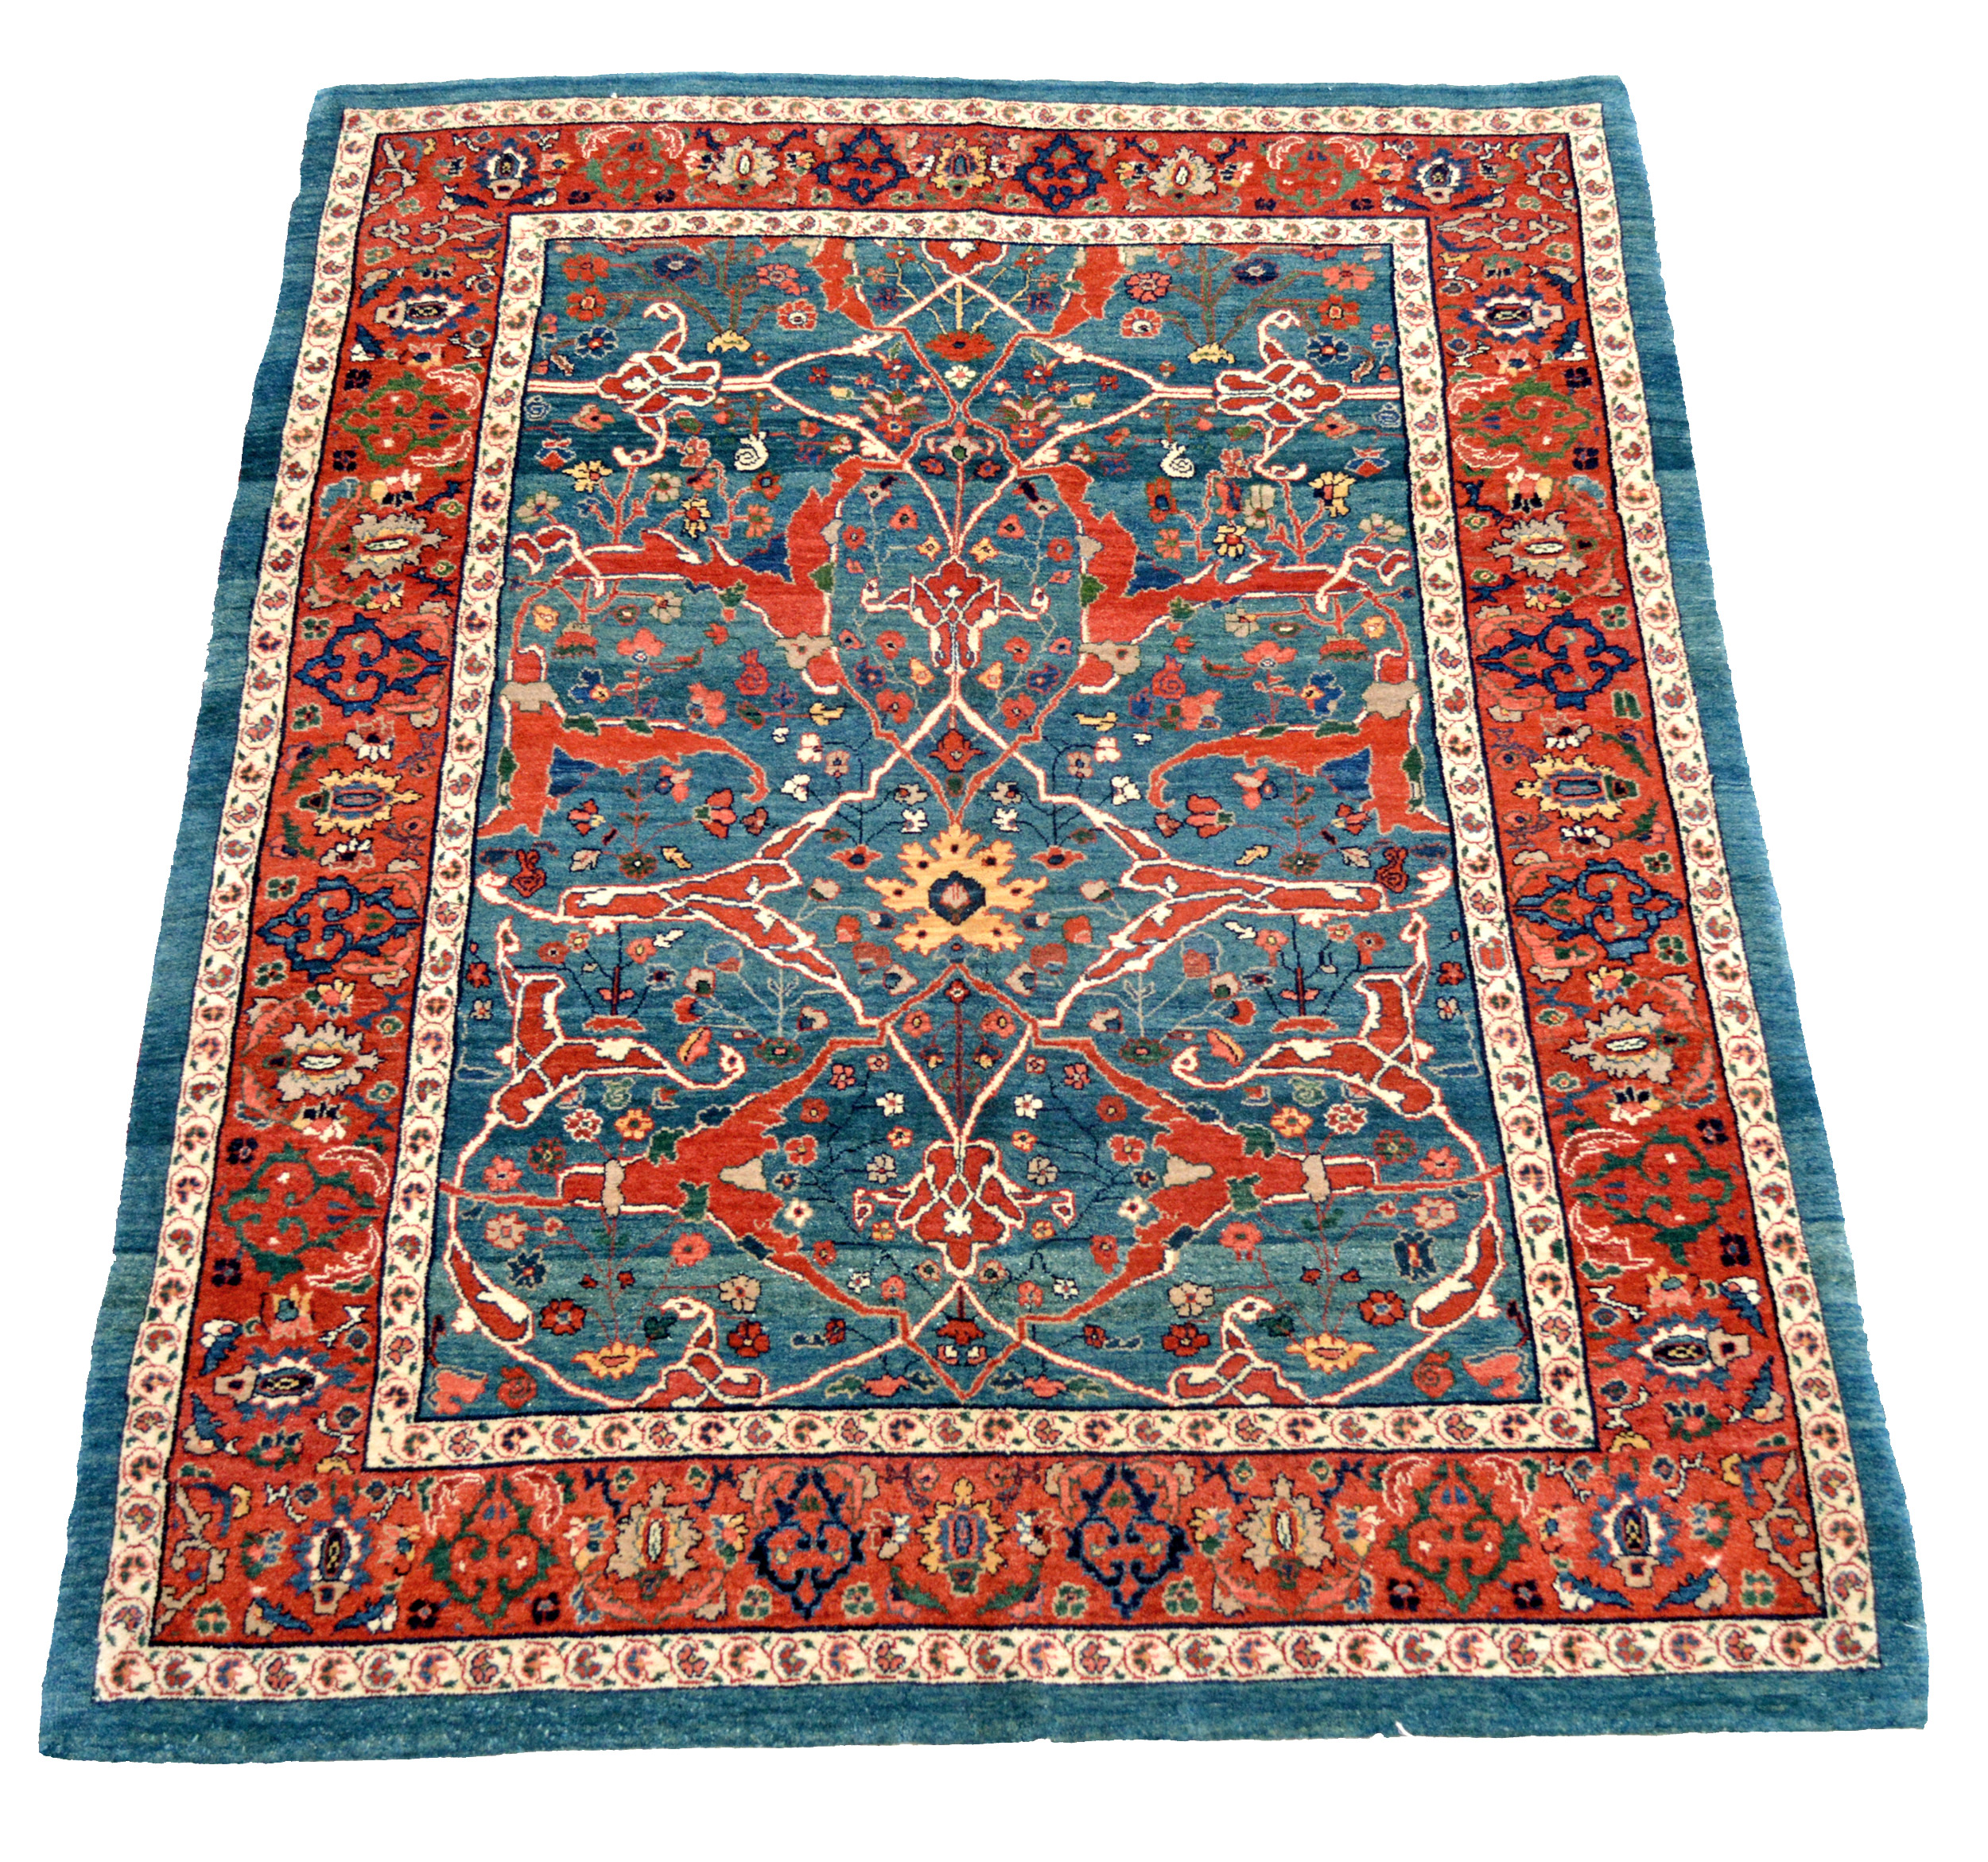 Contemporary hand woven Bidjar rug with Split Arabesque design - Douglas Stock Gallery, Oriental rugs Boston, Brookline, Newton, Weston, Concord, Wellesley, Natick,MA area